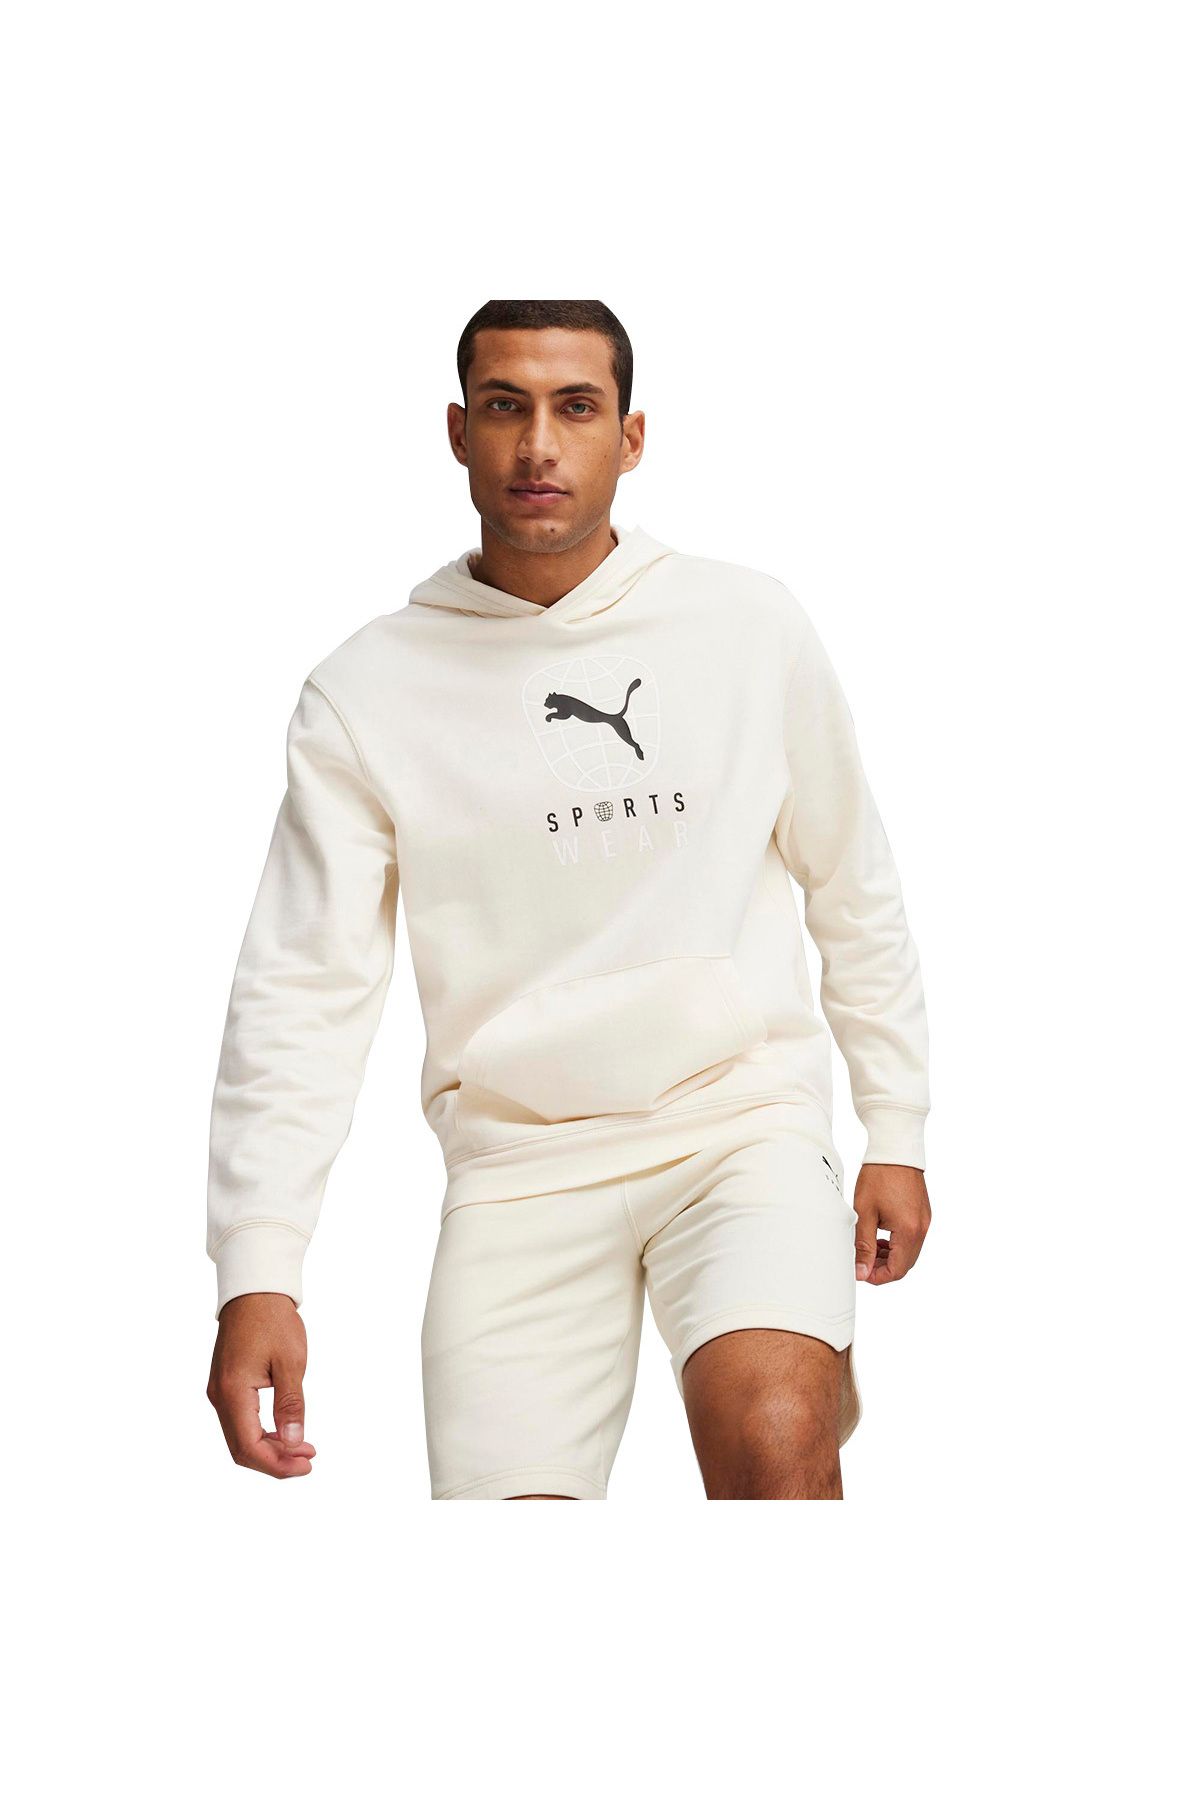 Puma Better Sportswear Erkek Bej Günlük Stil Sweatshirt 67900299